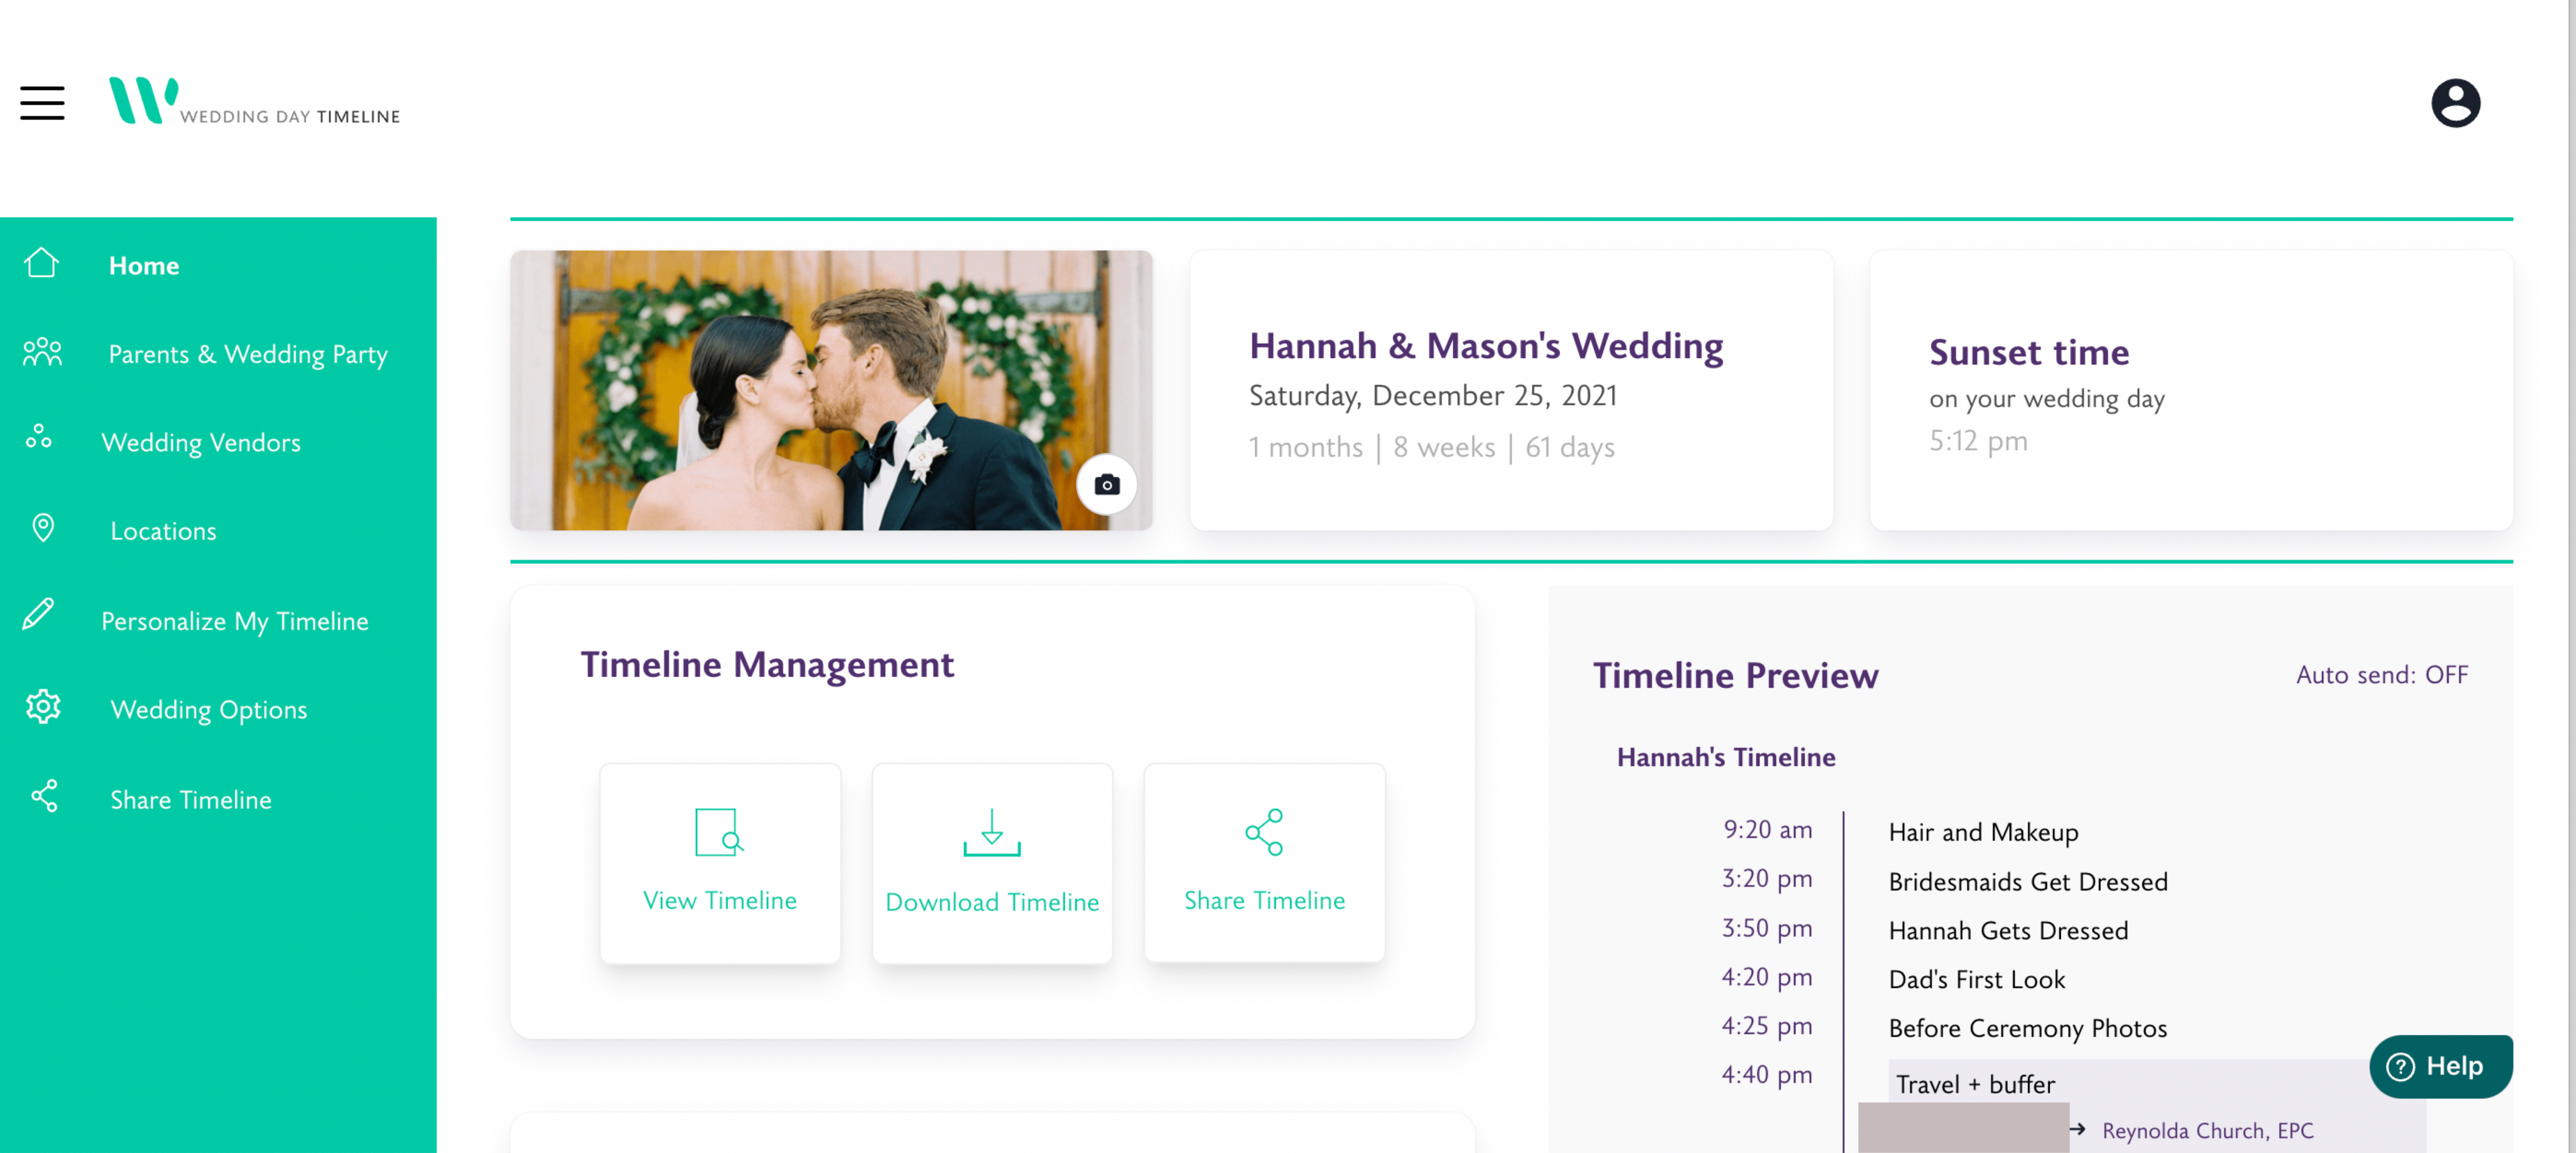 The Wedding Planning Timeline